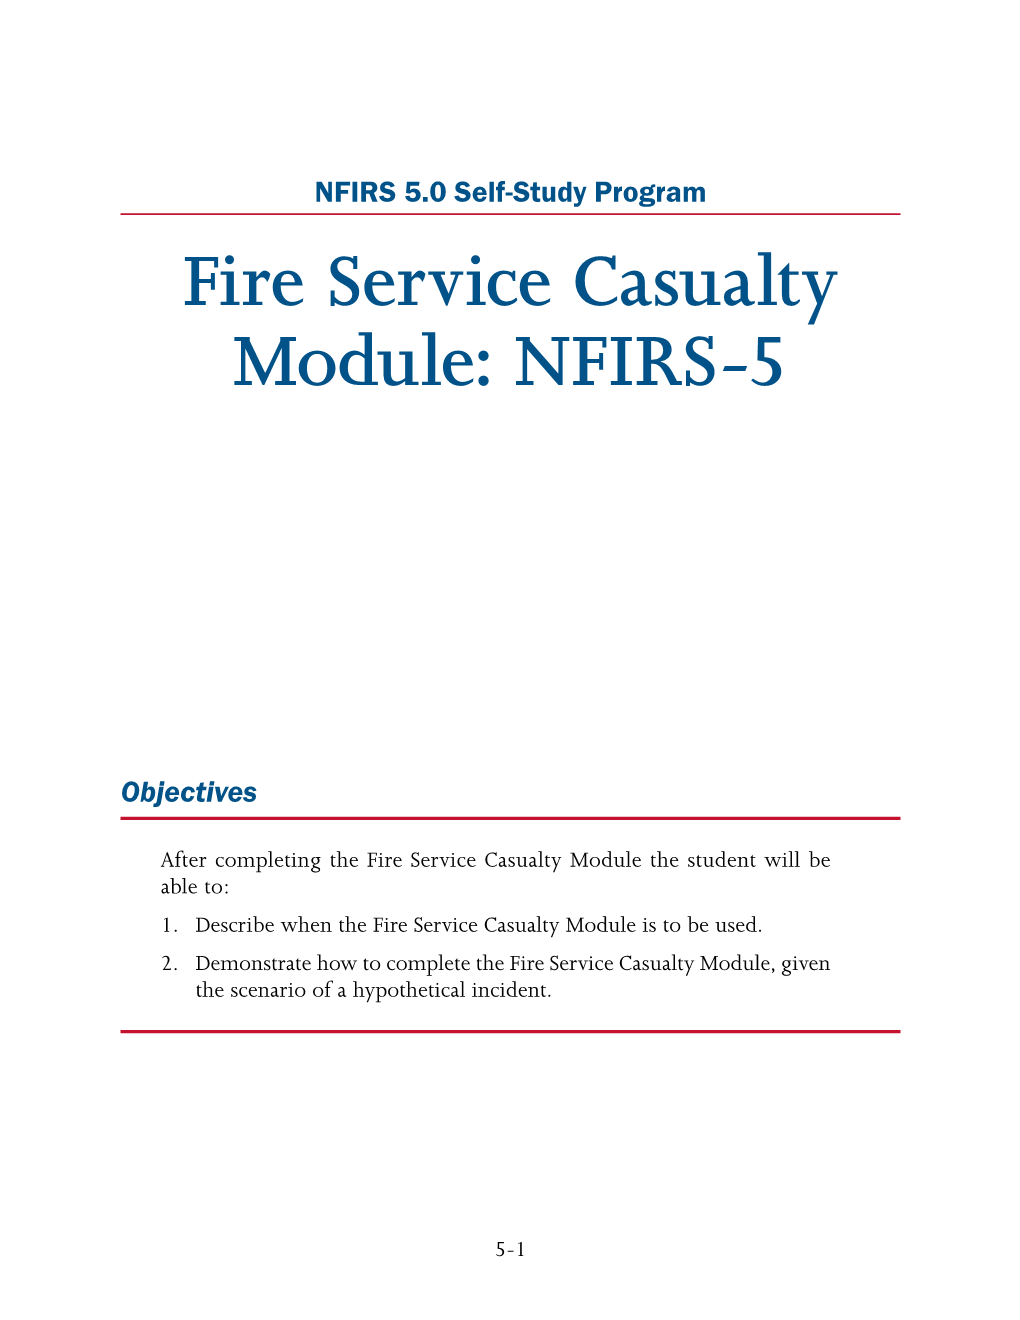 NFIRS 5.0 Self-Study Program: Fire Service Casualty Module: NFIRS-5